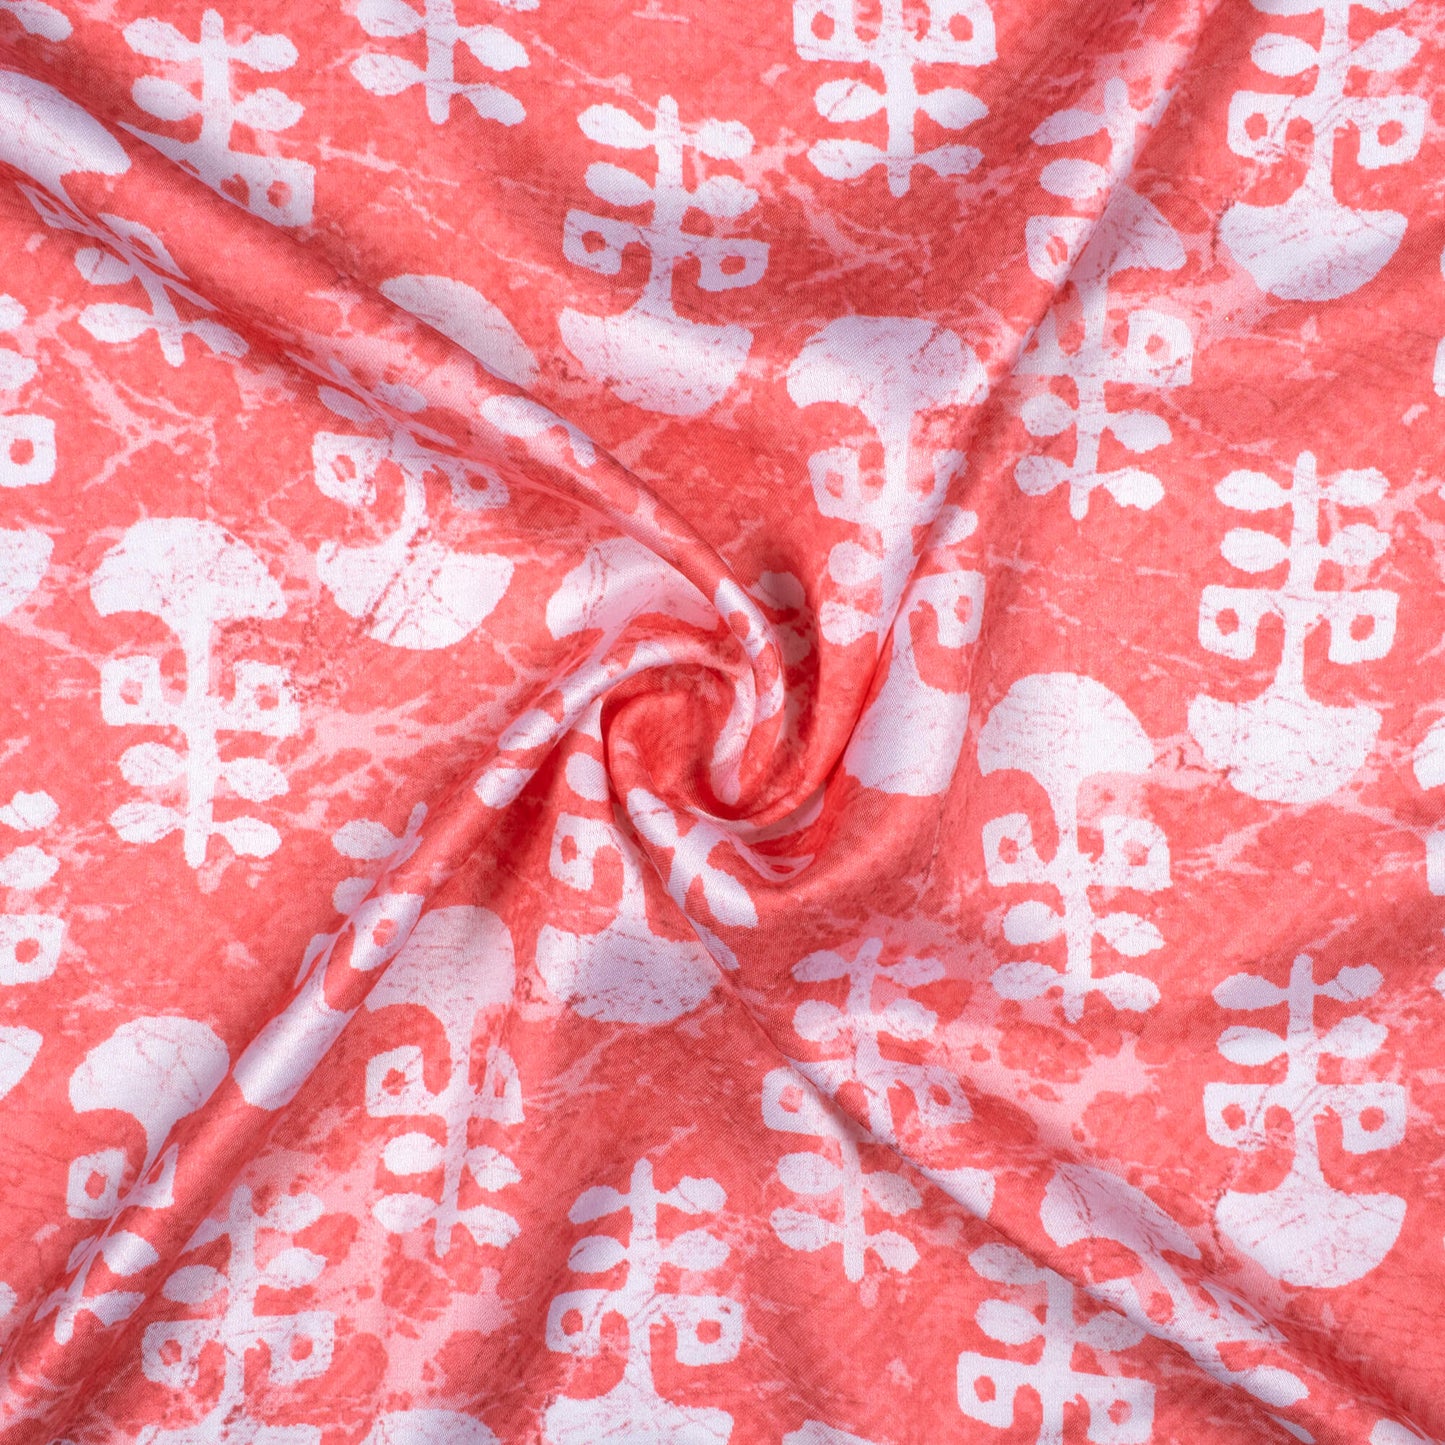 Rouge Pink And White Booti Pattern Digital Print Premium Lush Satin Fabric